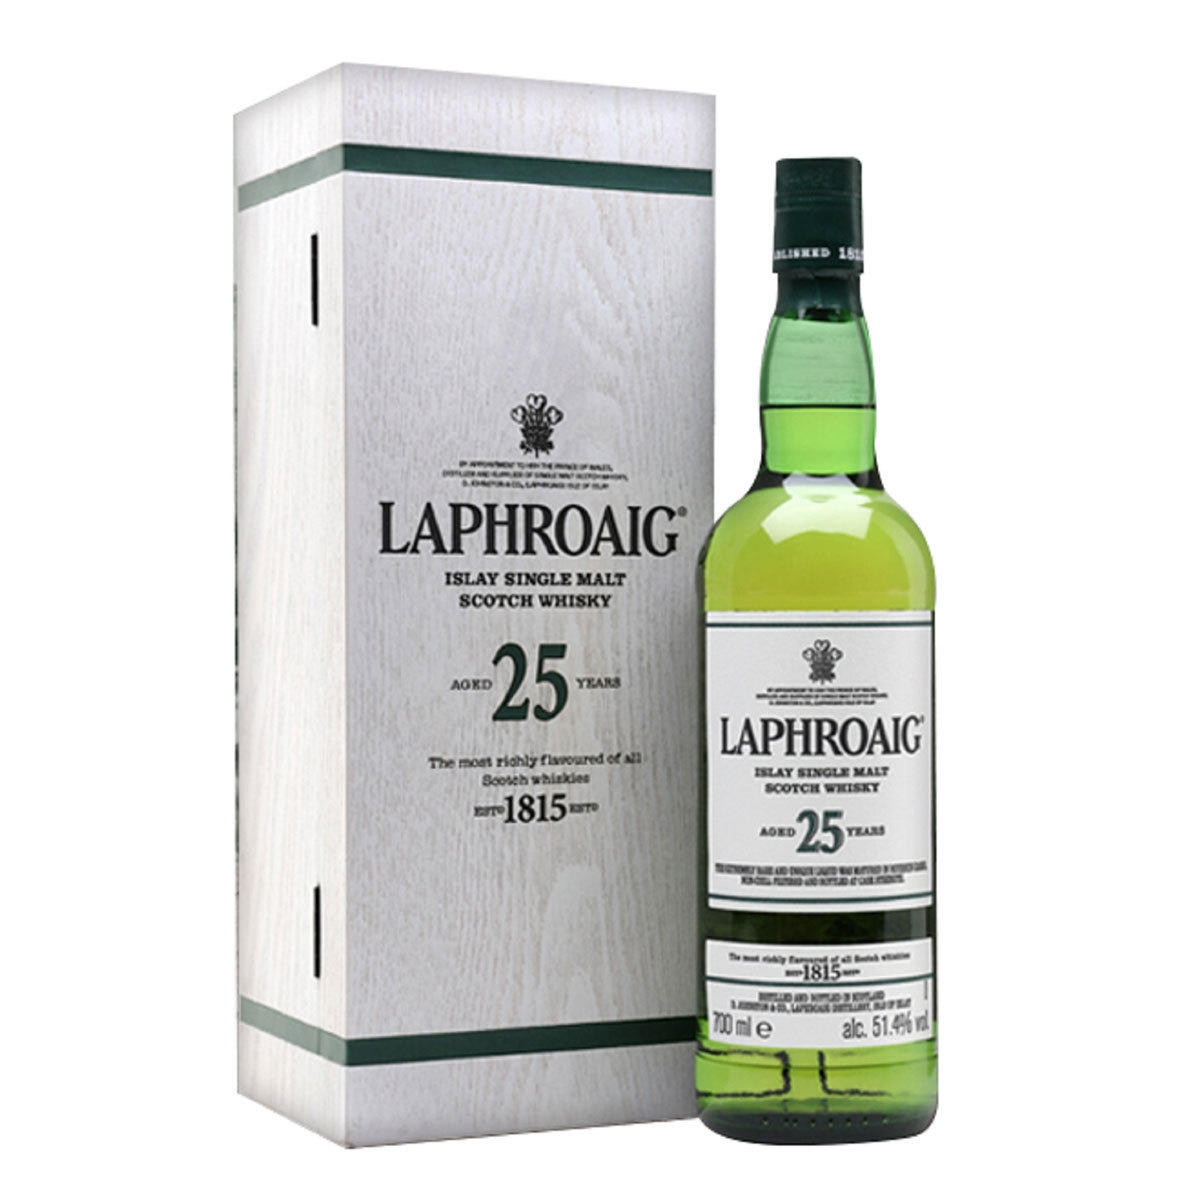 Laphroaig 18 Year Old Islay Single Malt Scotch Whisky, 70cl